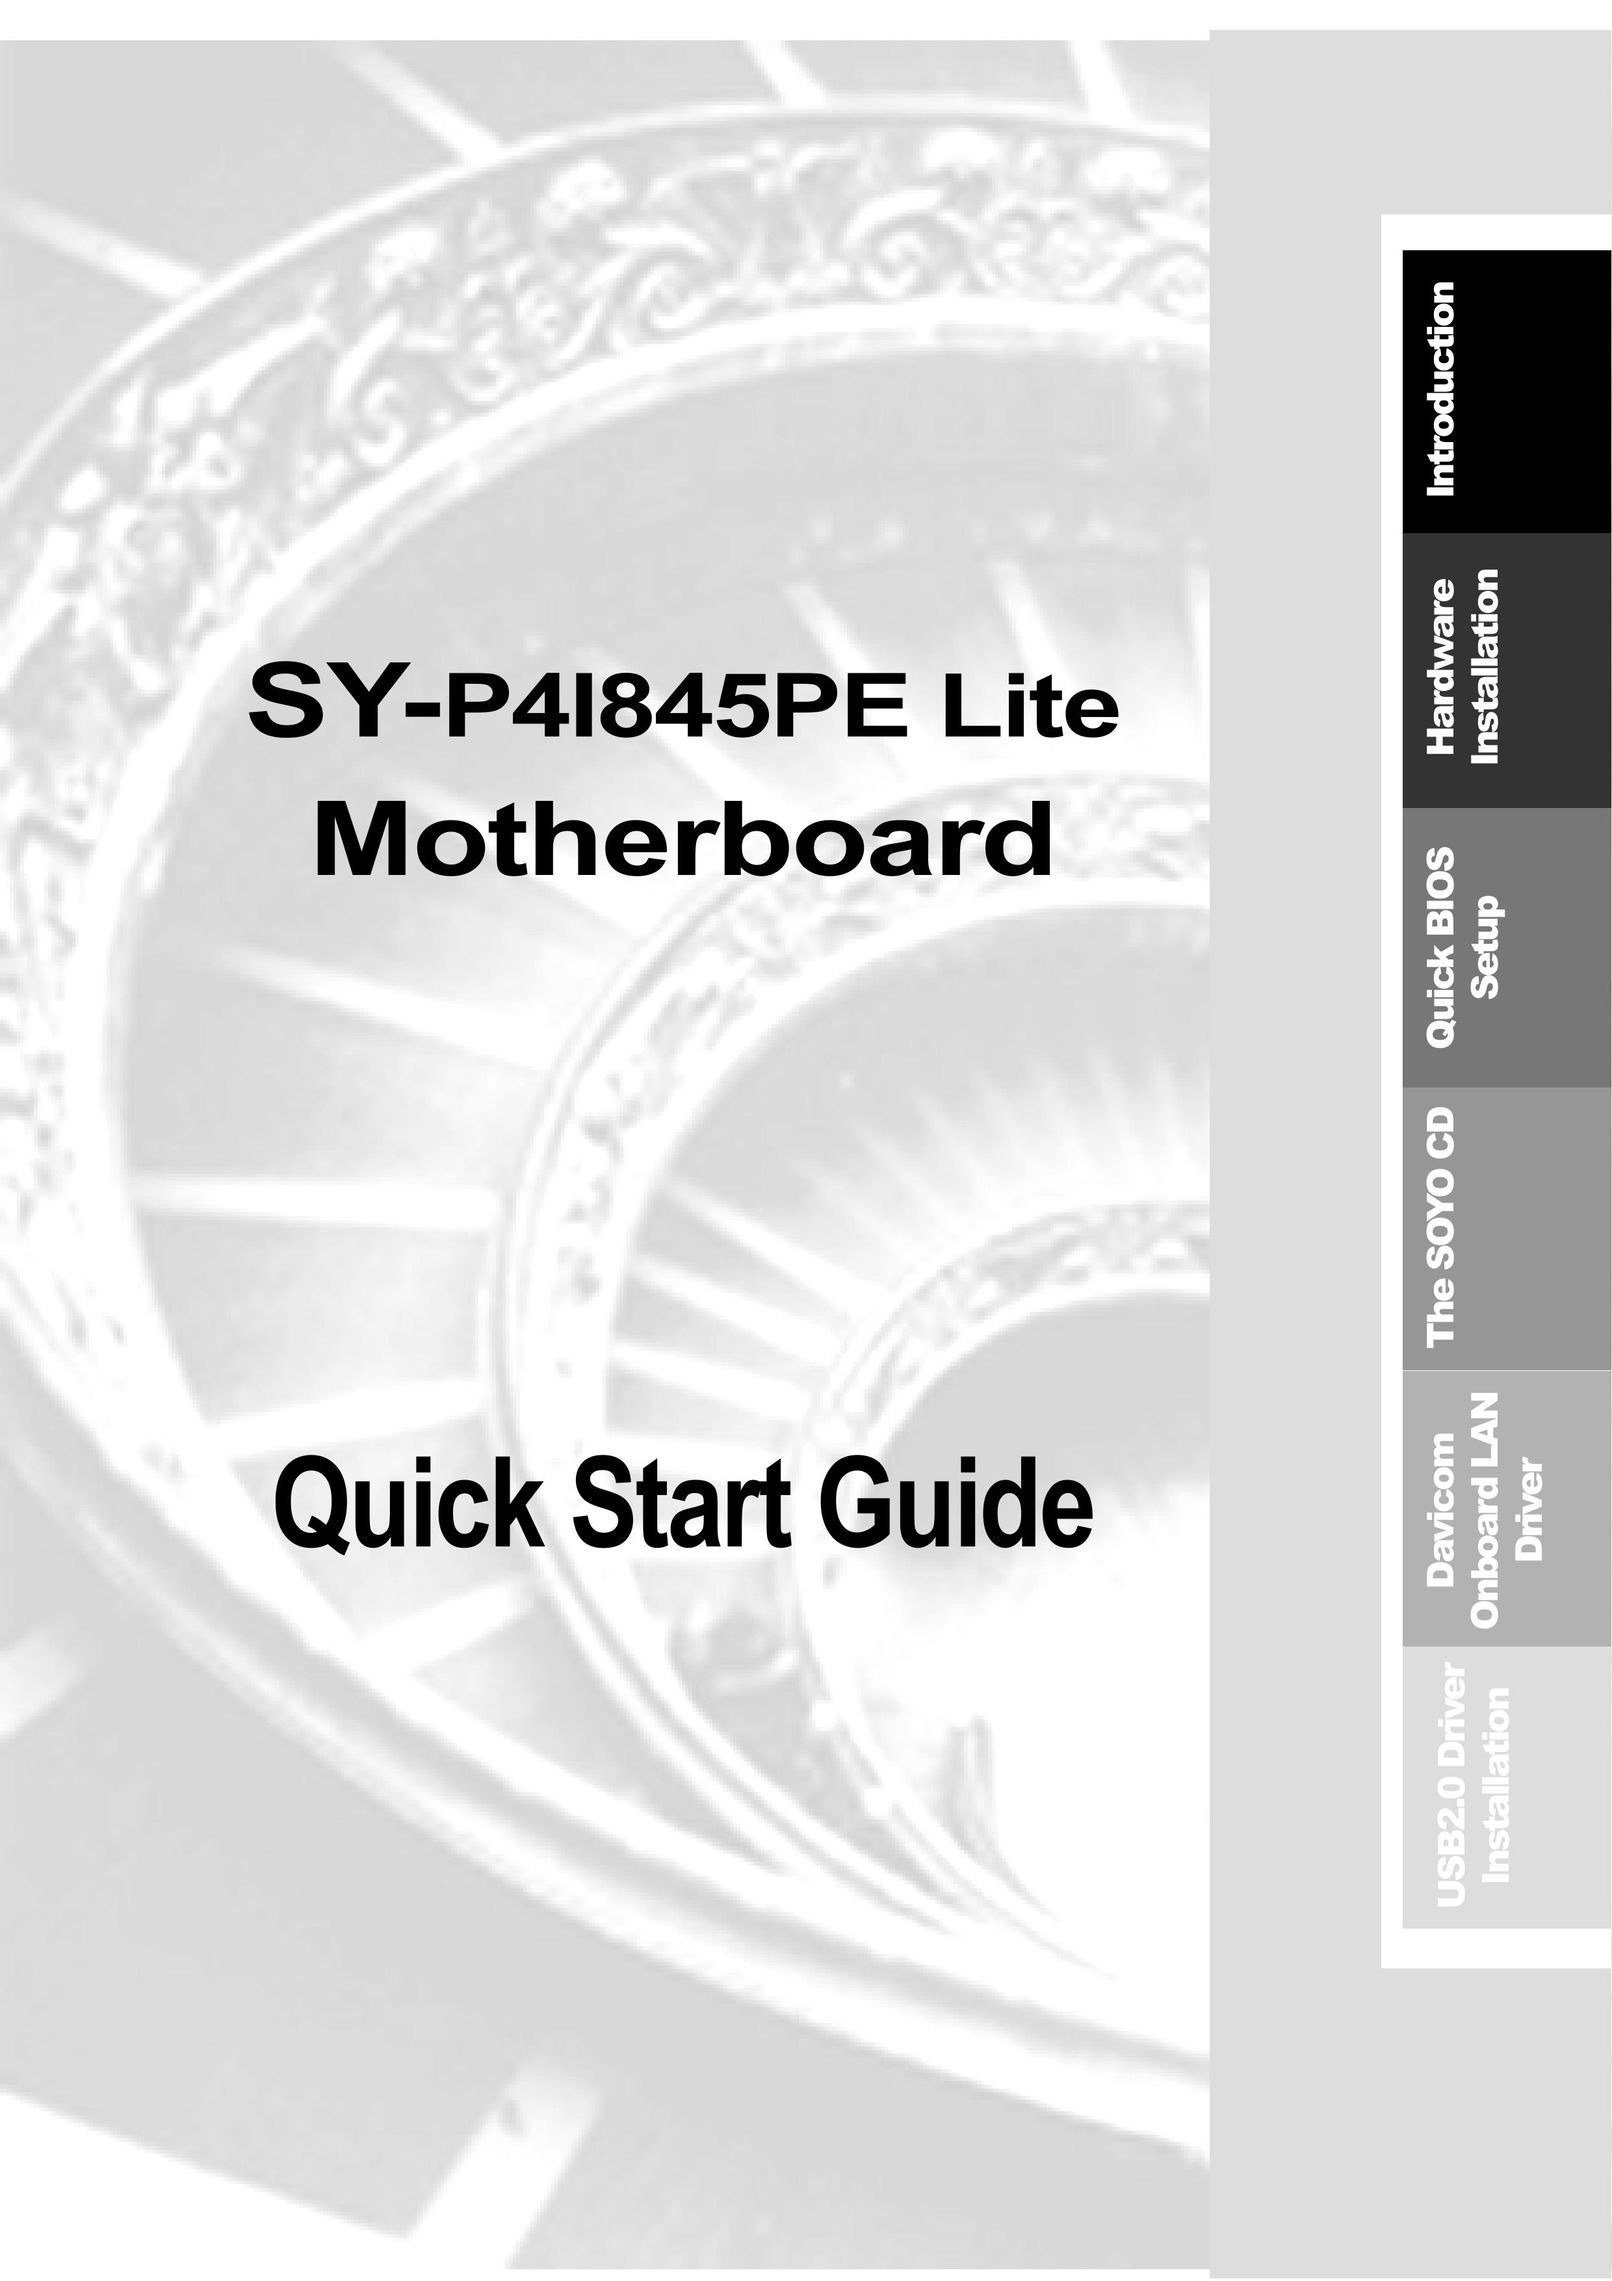 SOYO SY-P41845PE Computer Drive User Manual